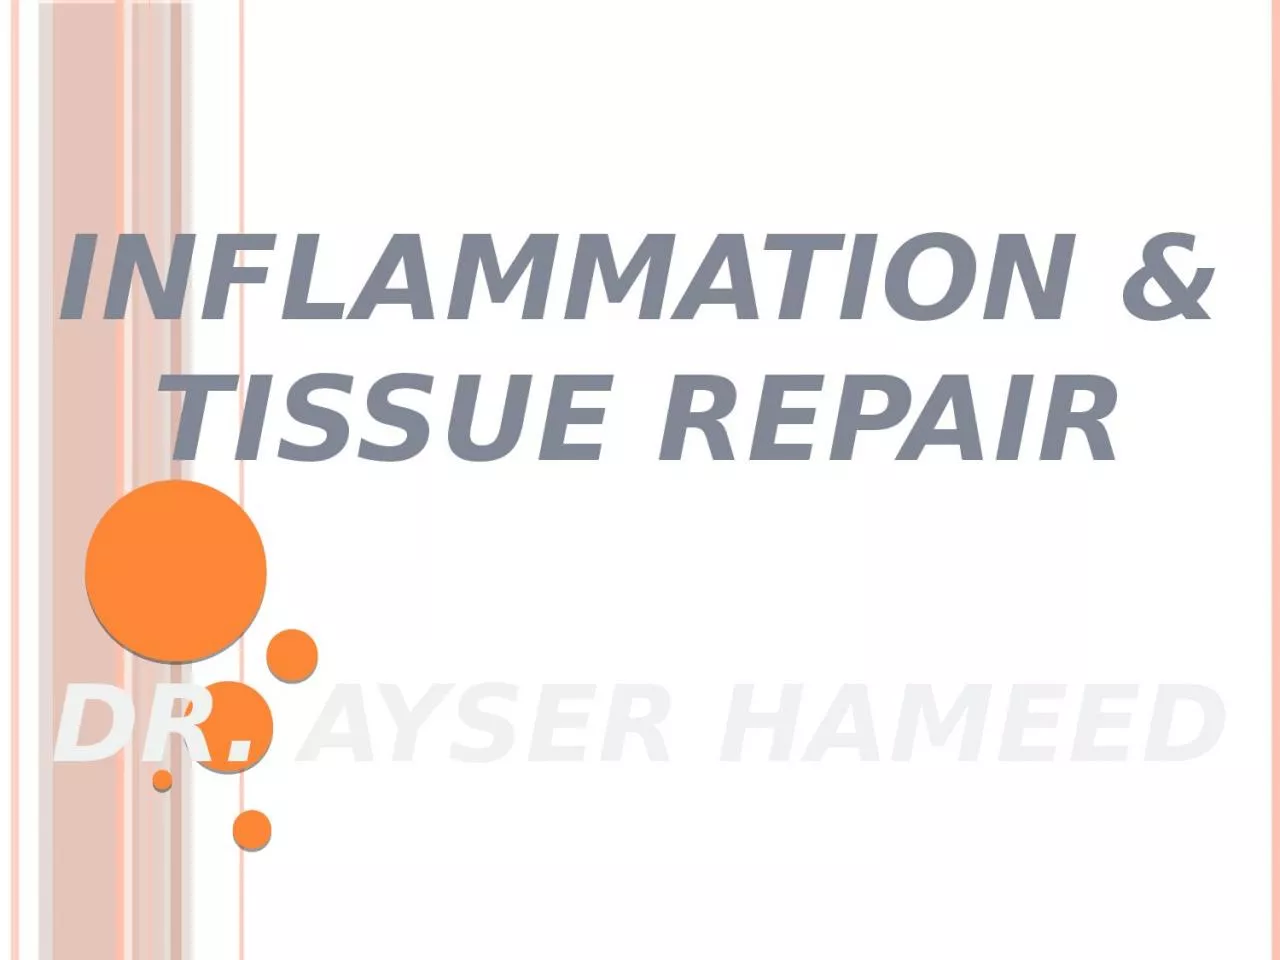 INFLAMMATION & TISSUE REPAIR